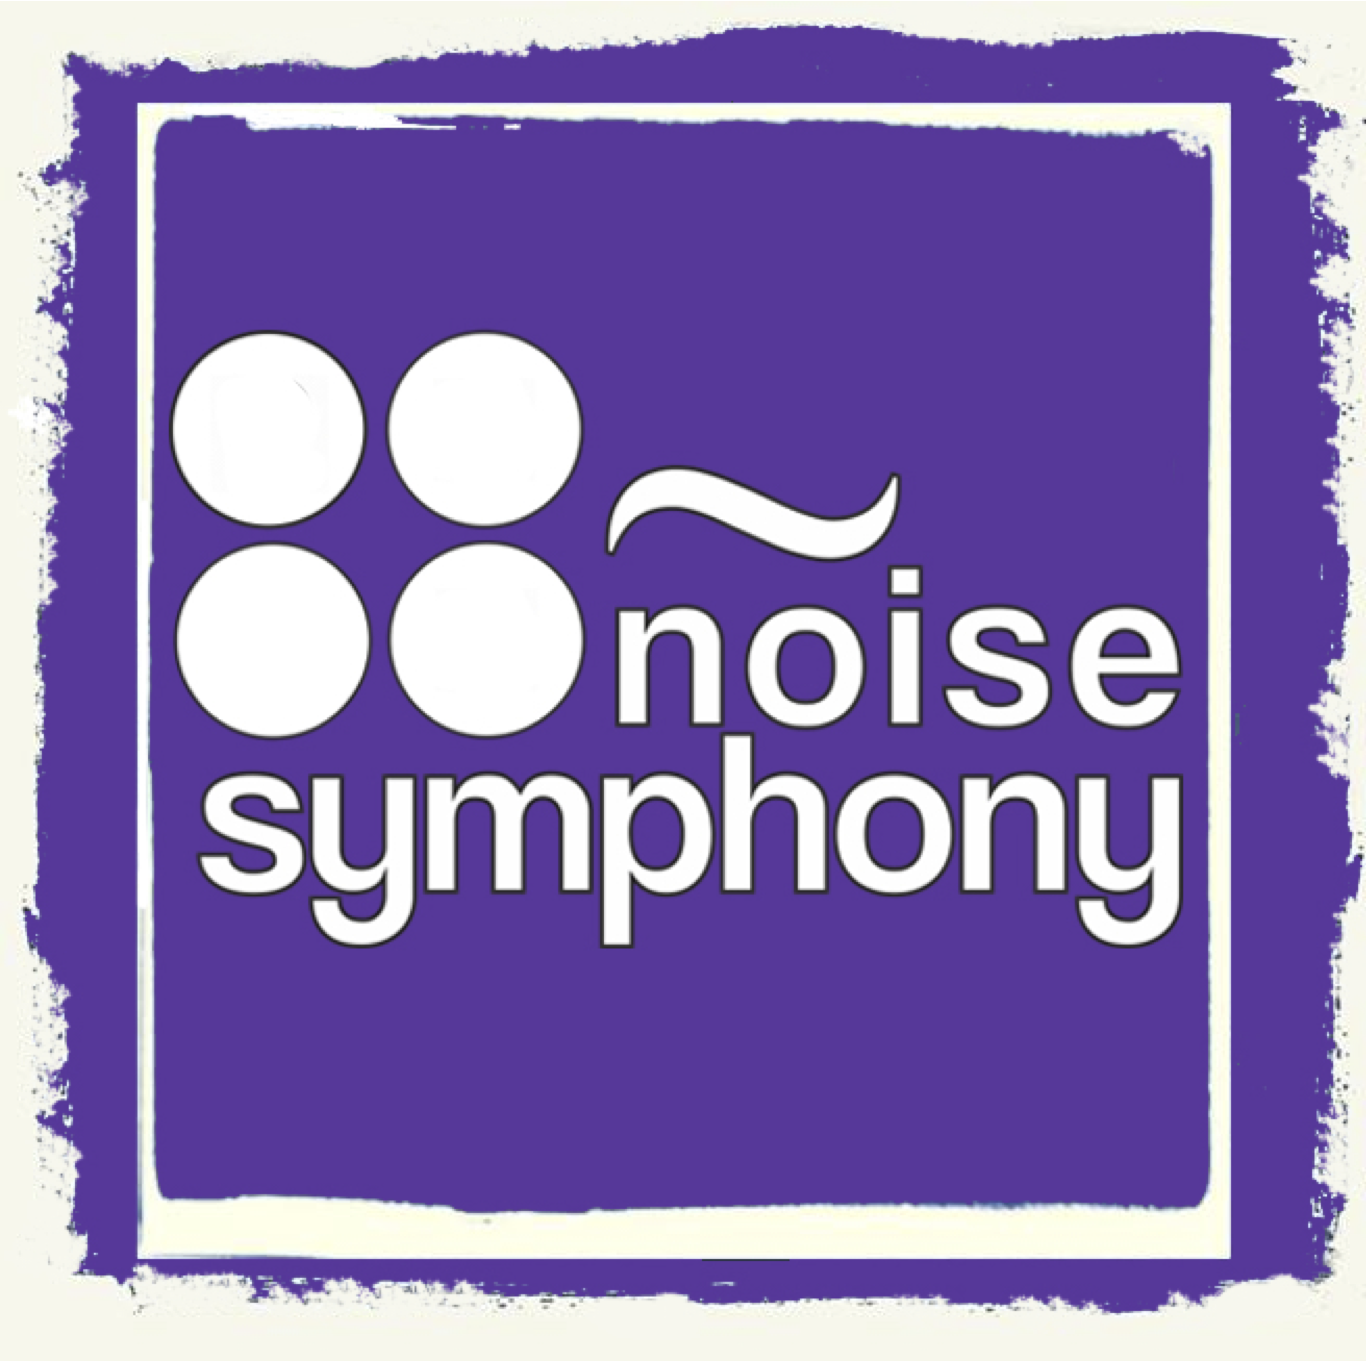 Etichette361: Noise Symphony